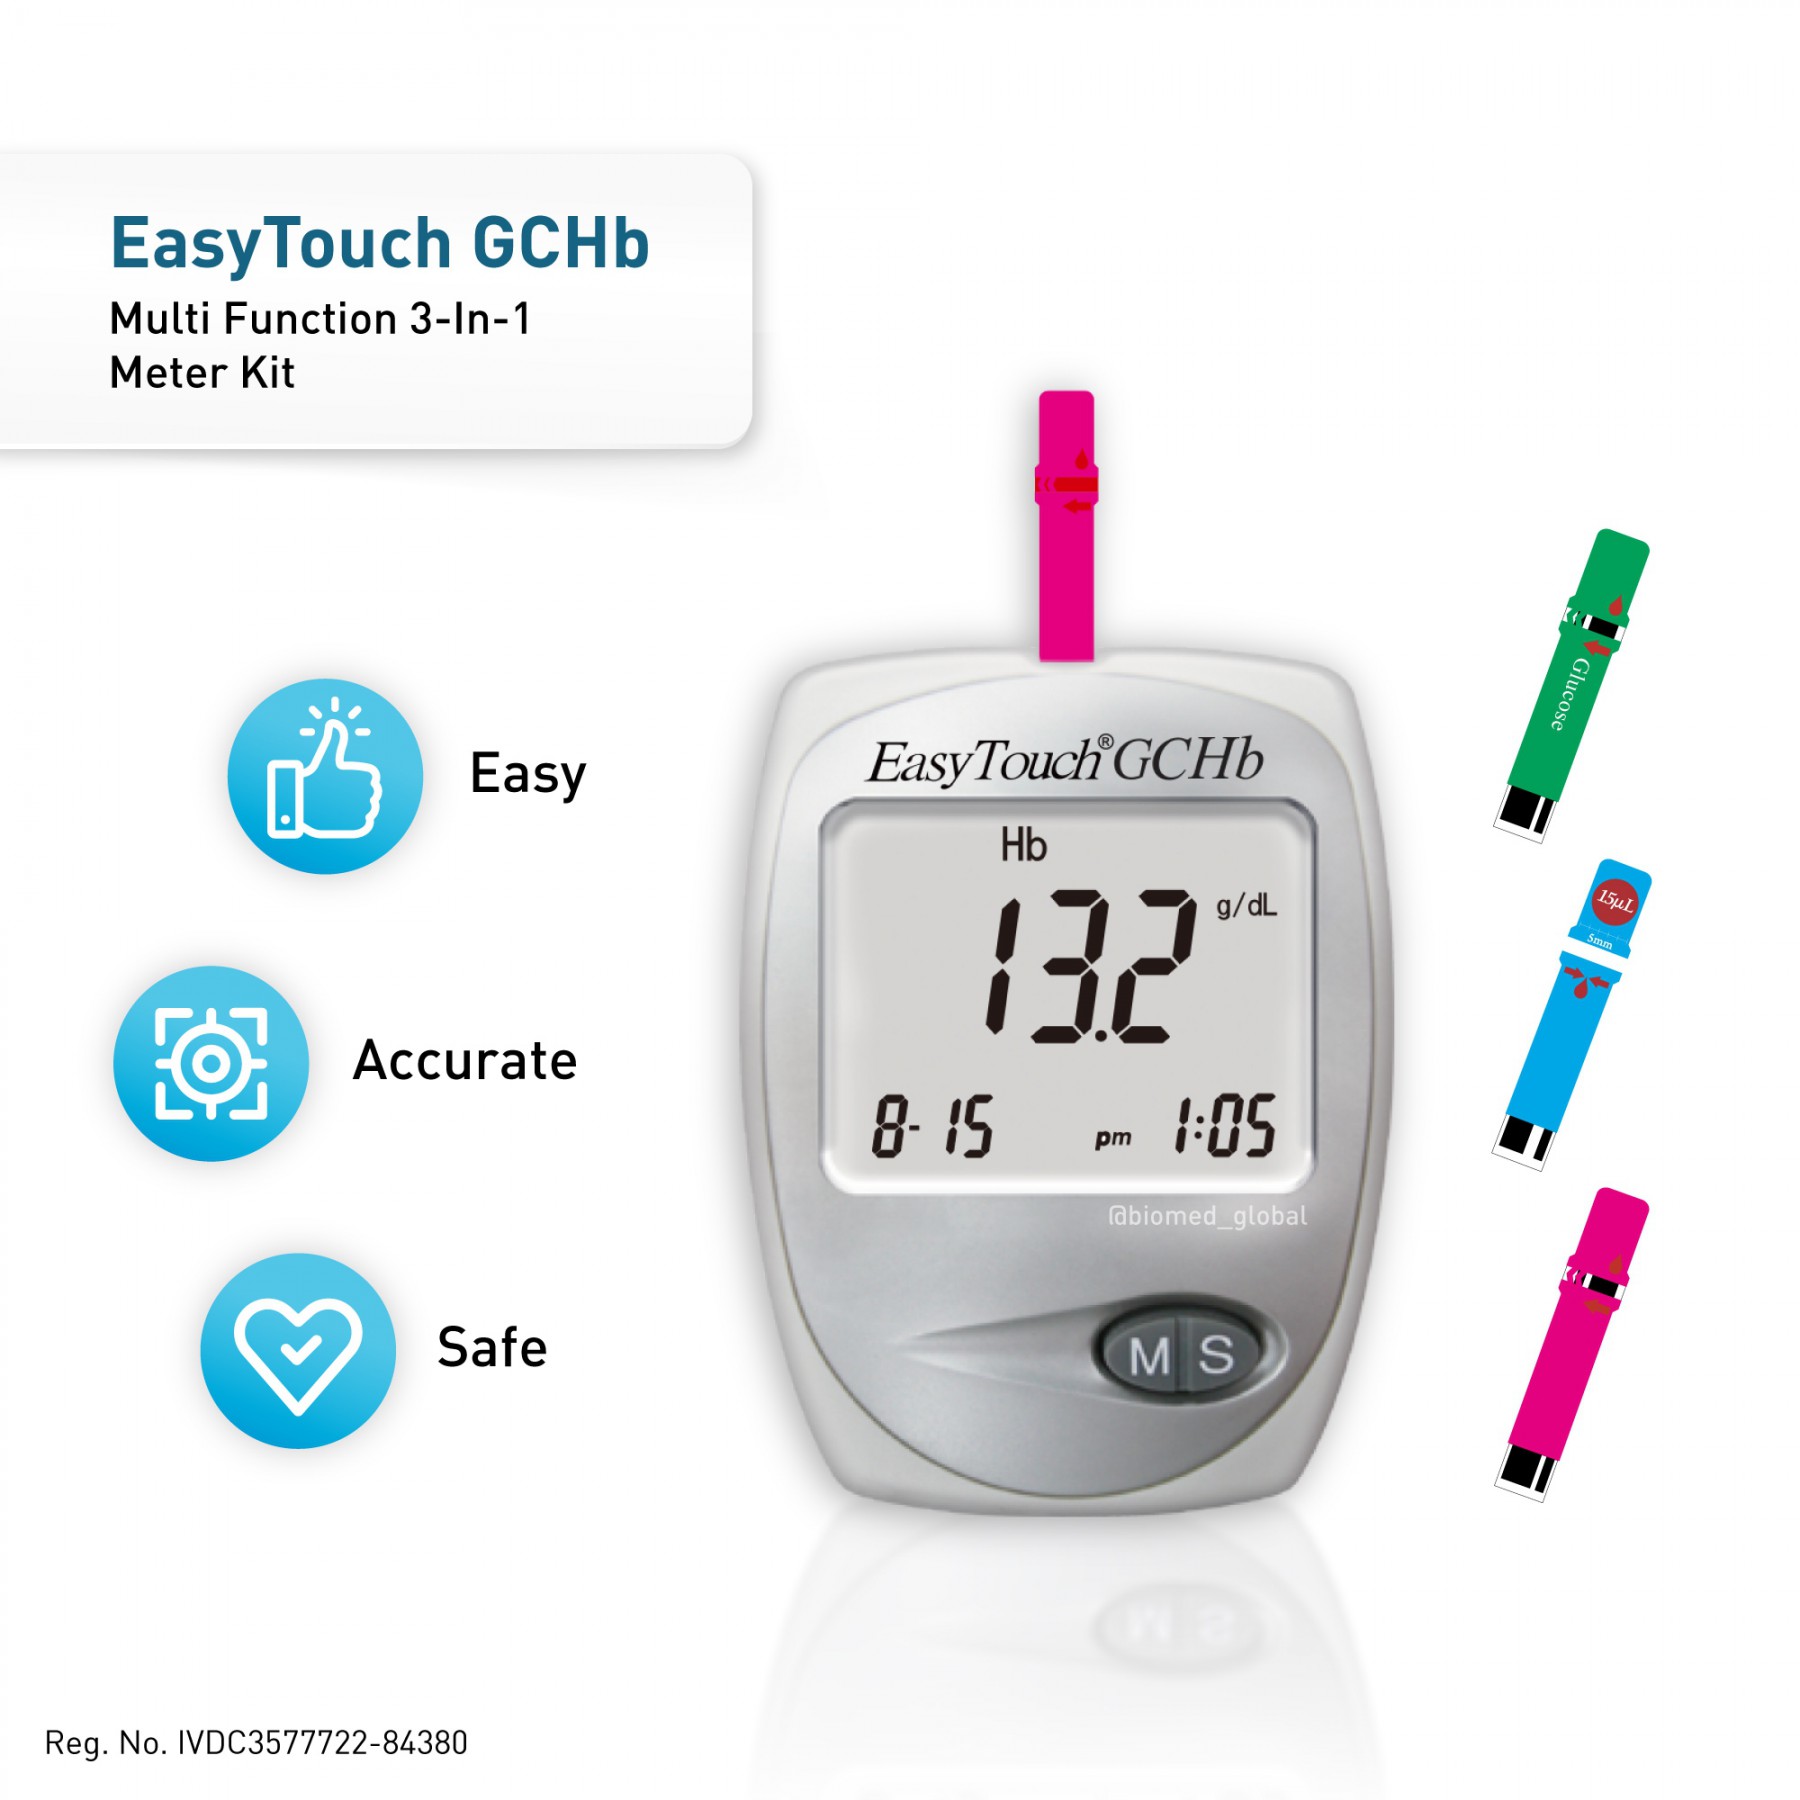  EasyTouch GCHb Glucose, Cholesterol and Hemoglobin Meter Kit Bundle with 25 Hemoglobin Strips & 25 Blood Lancets (BUNDLE PACK)